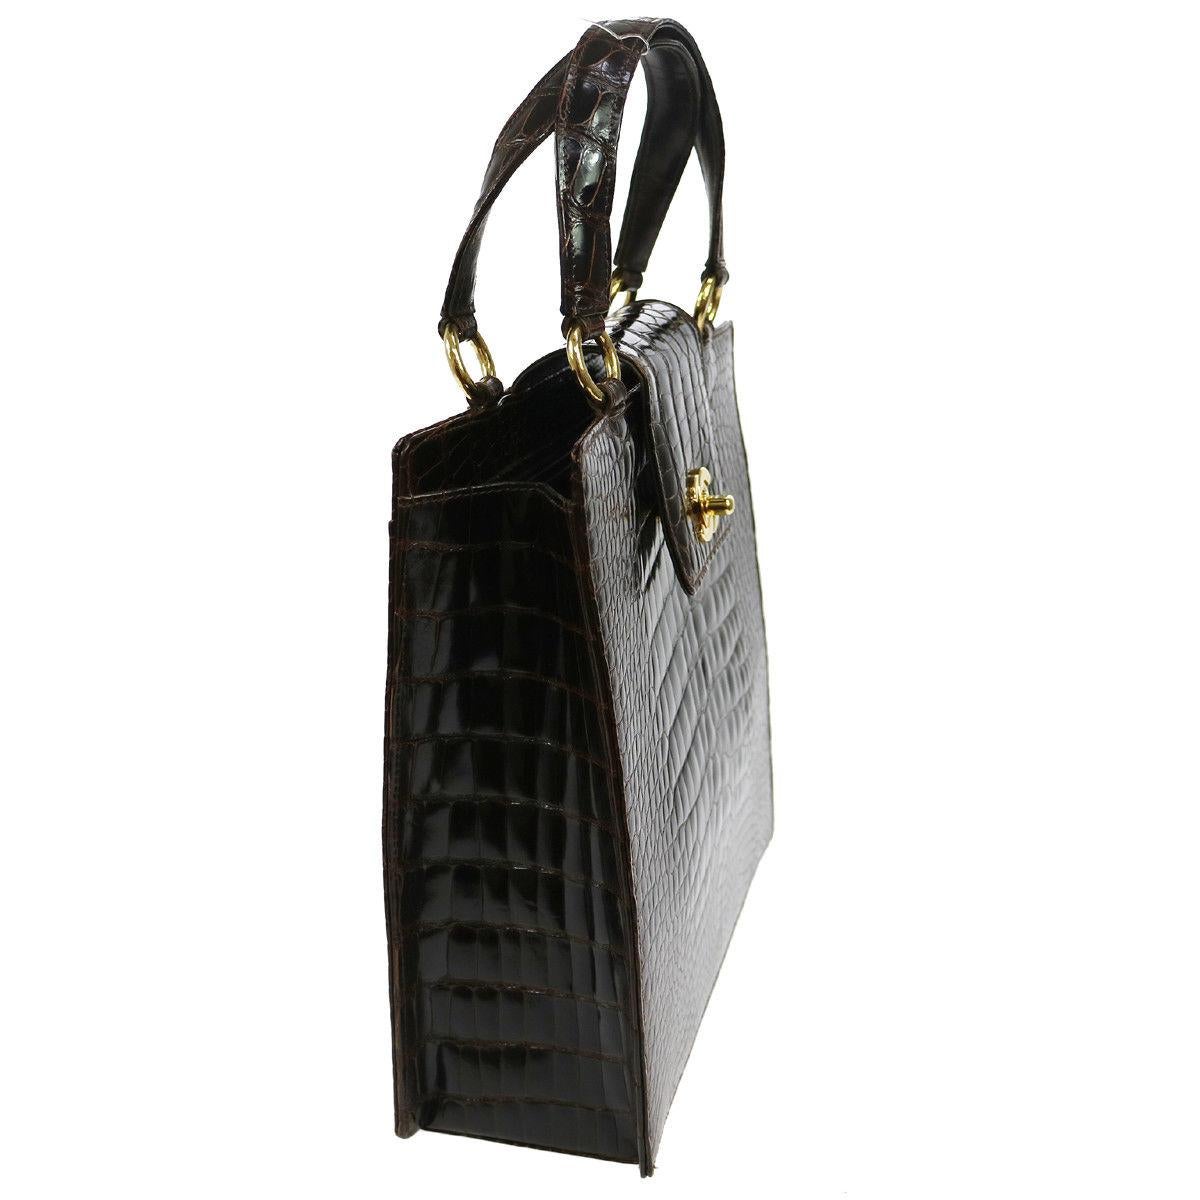 Women's Chanel Rare Crocodile Gold Kelly StyleEvening Top Handle Satchel Bag in Box